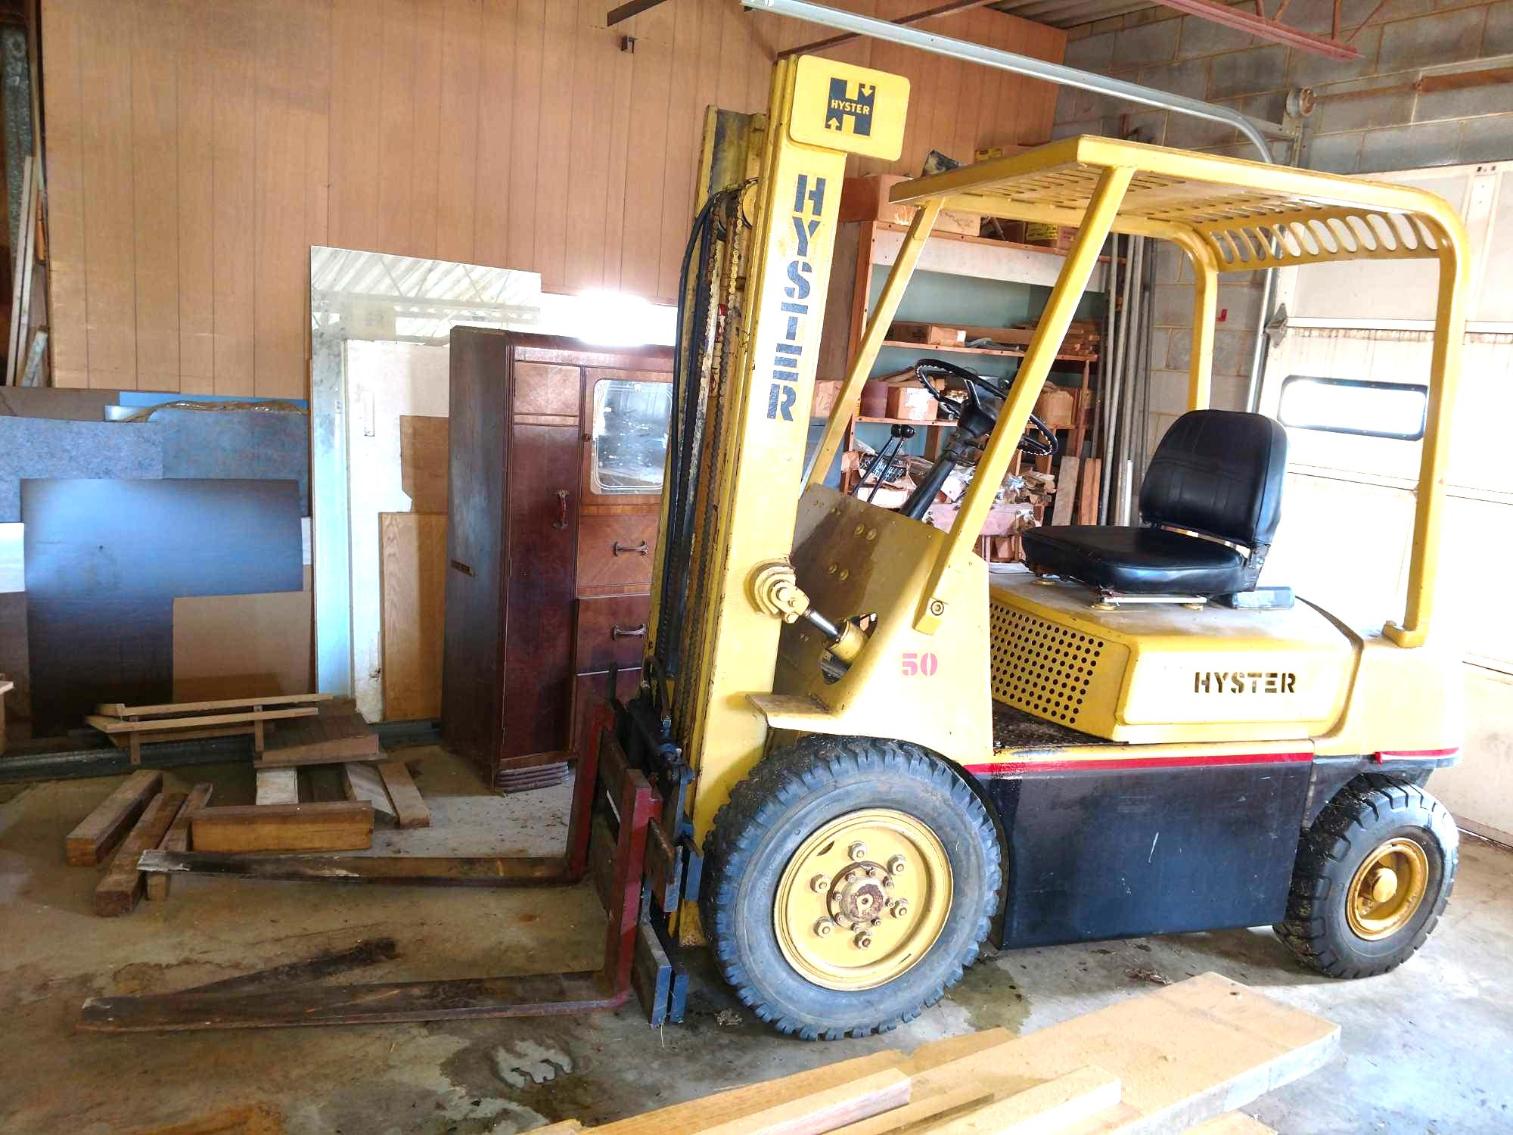 Woodworking Equipment - Spencer, NC